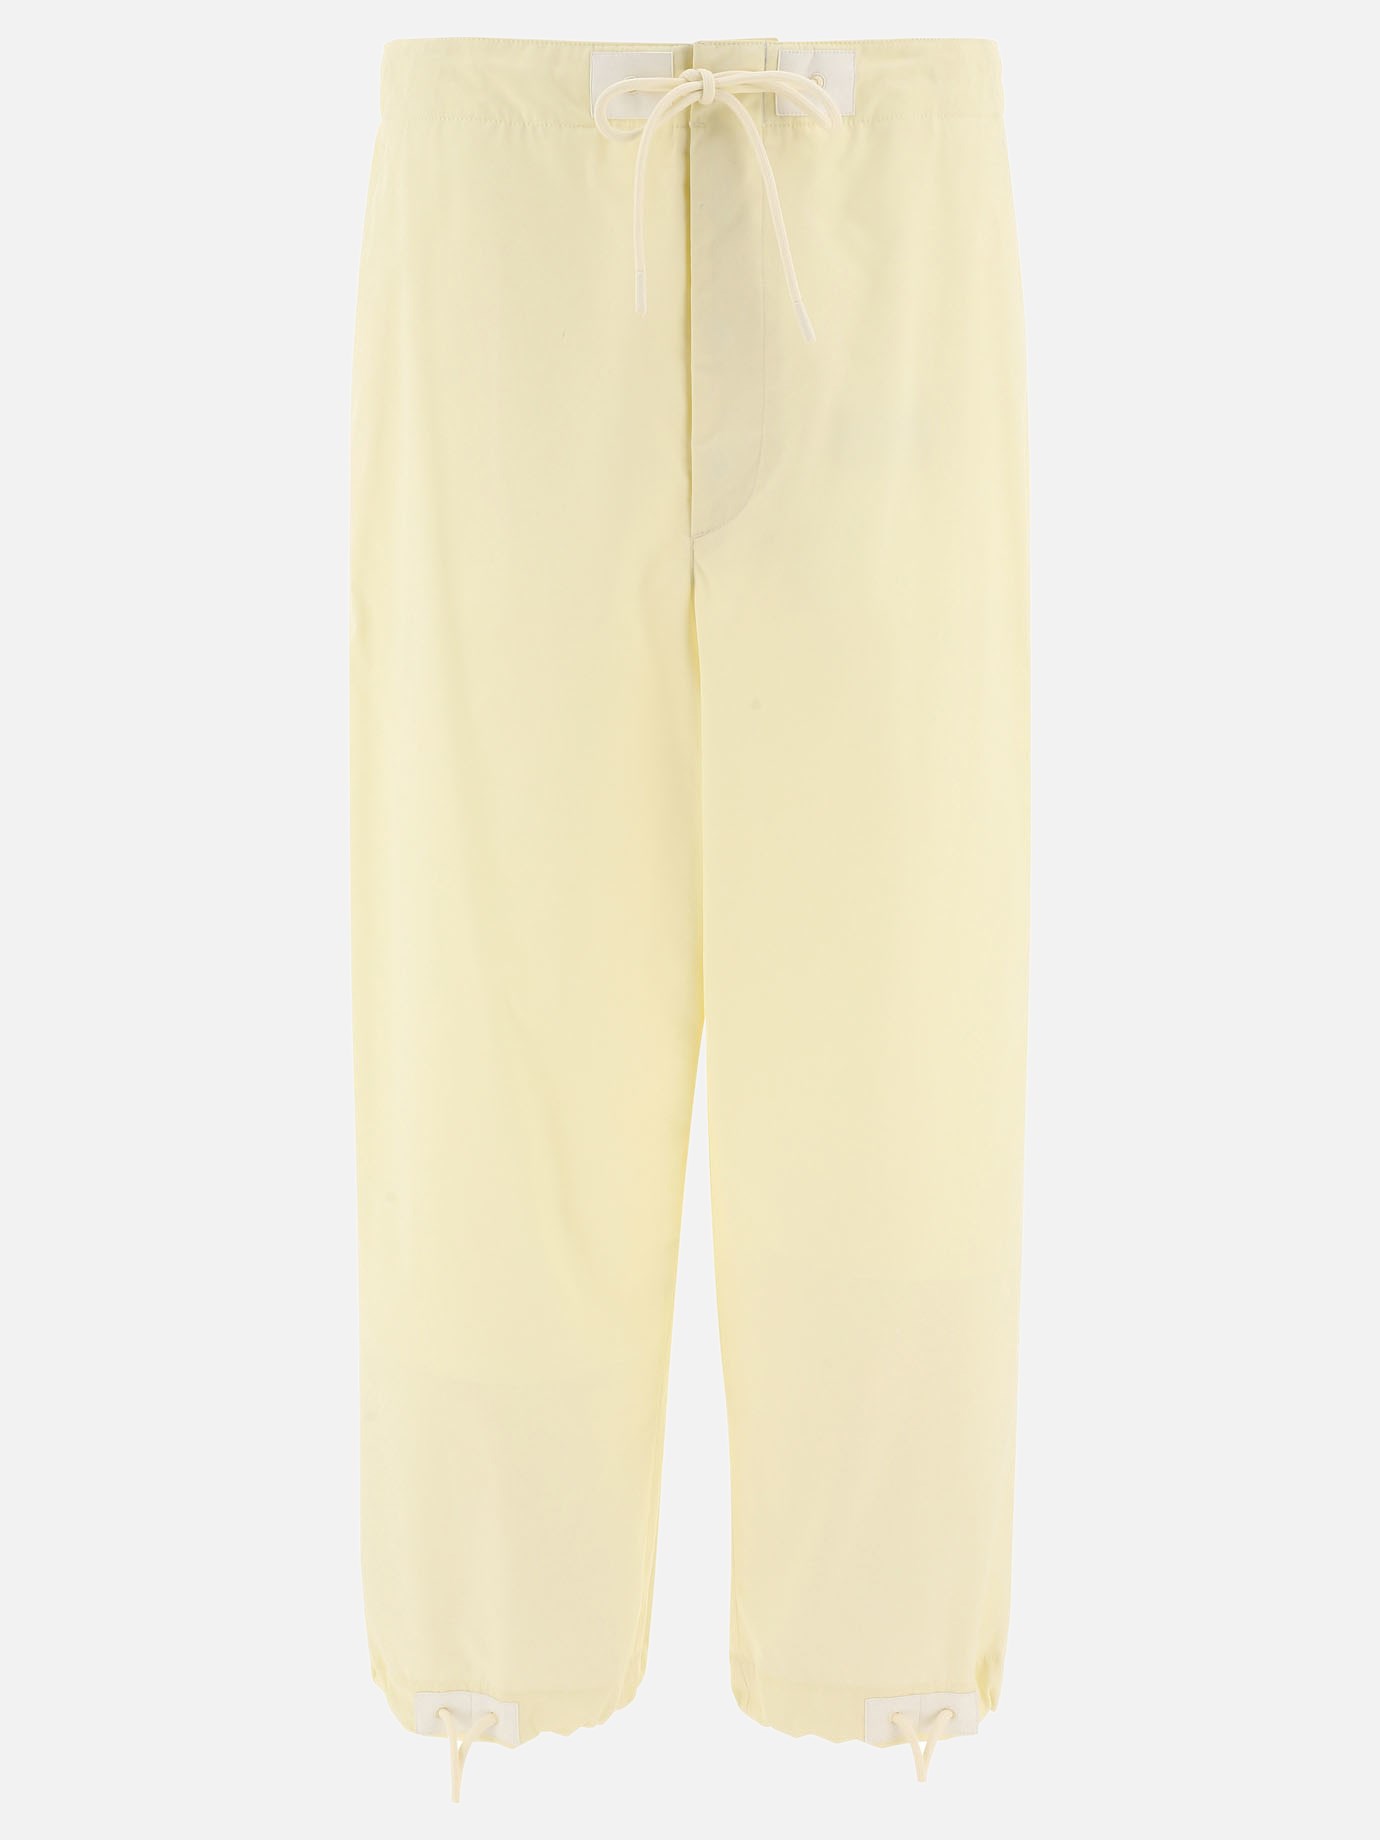 Pantaloni  1952  by Moncler Genius